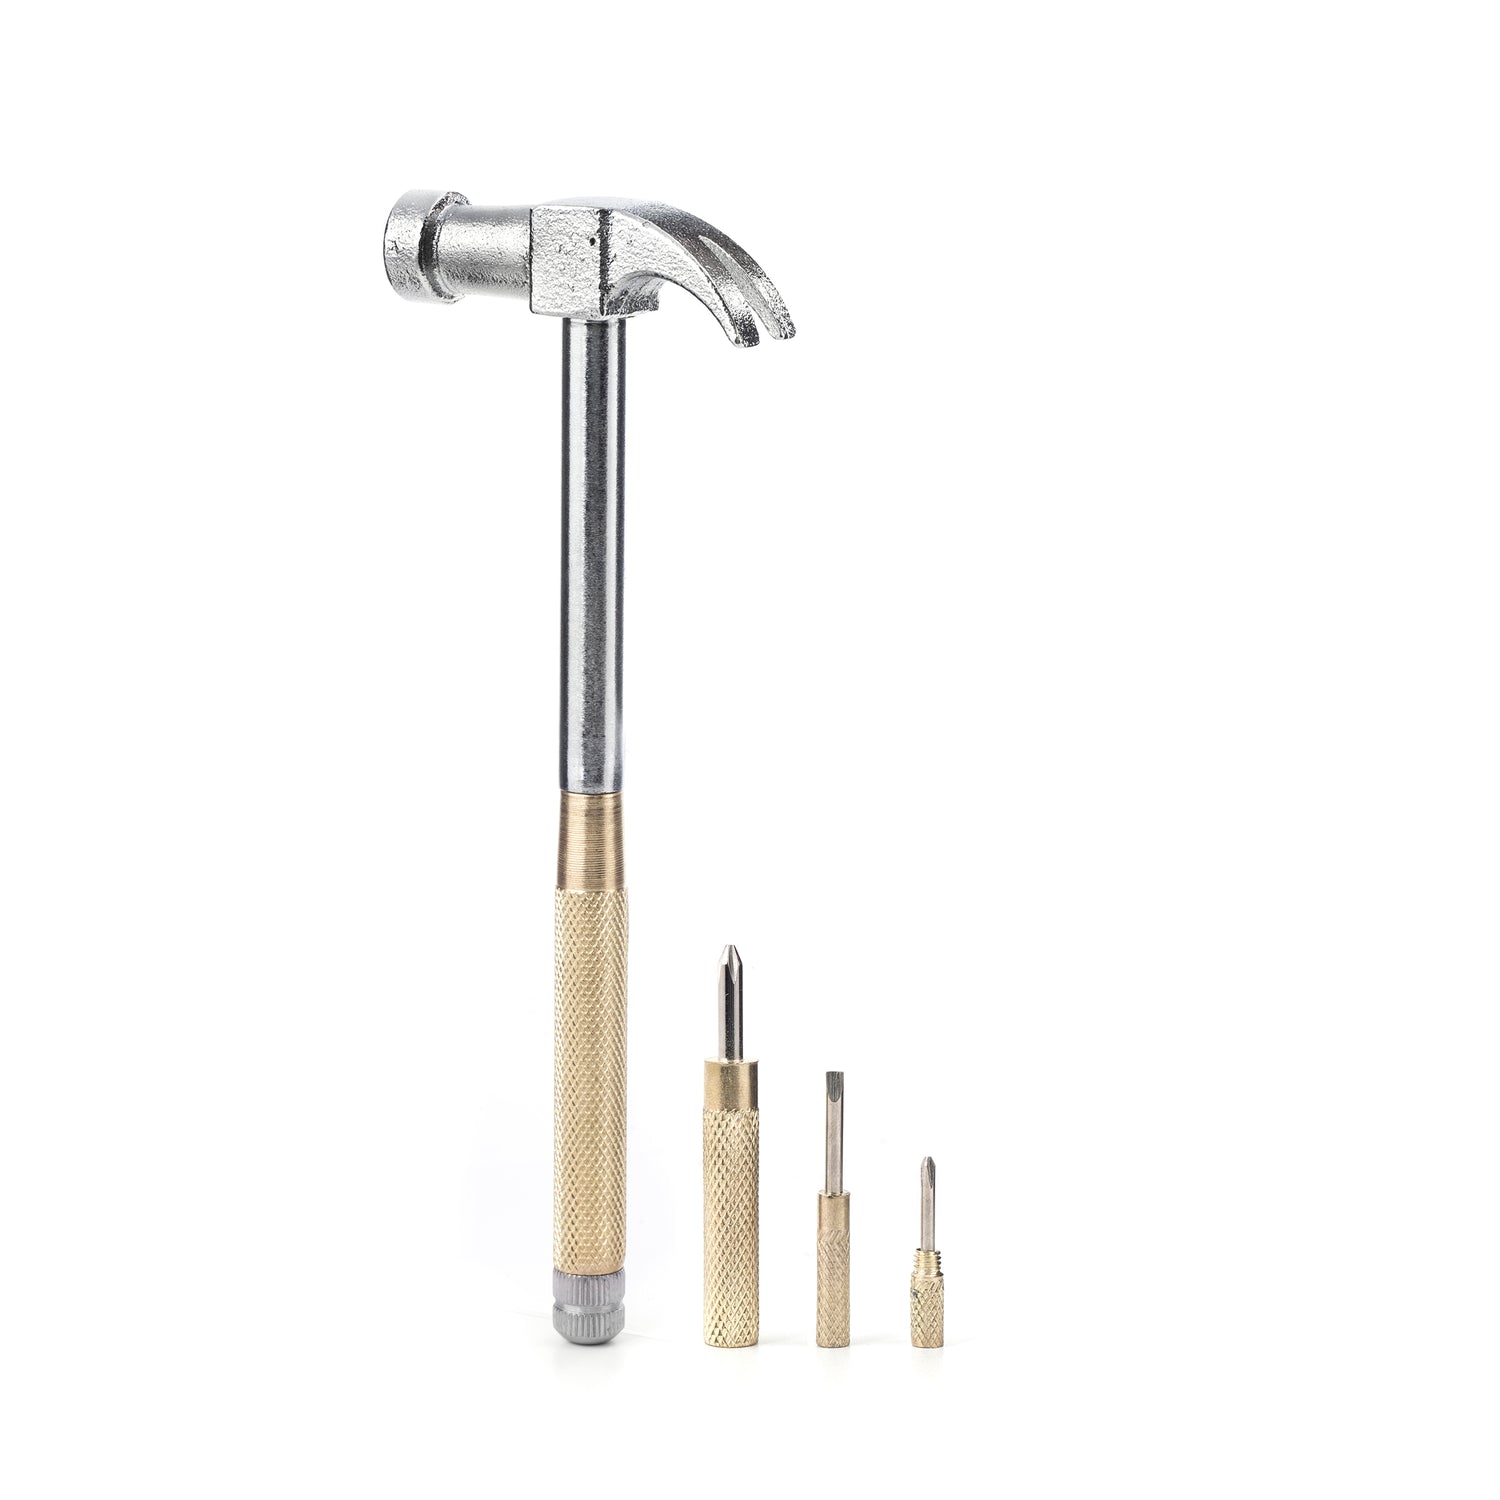 Kikkerland - Black Wood Mini Hammer Tool - KR13-BK